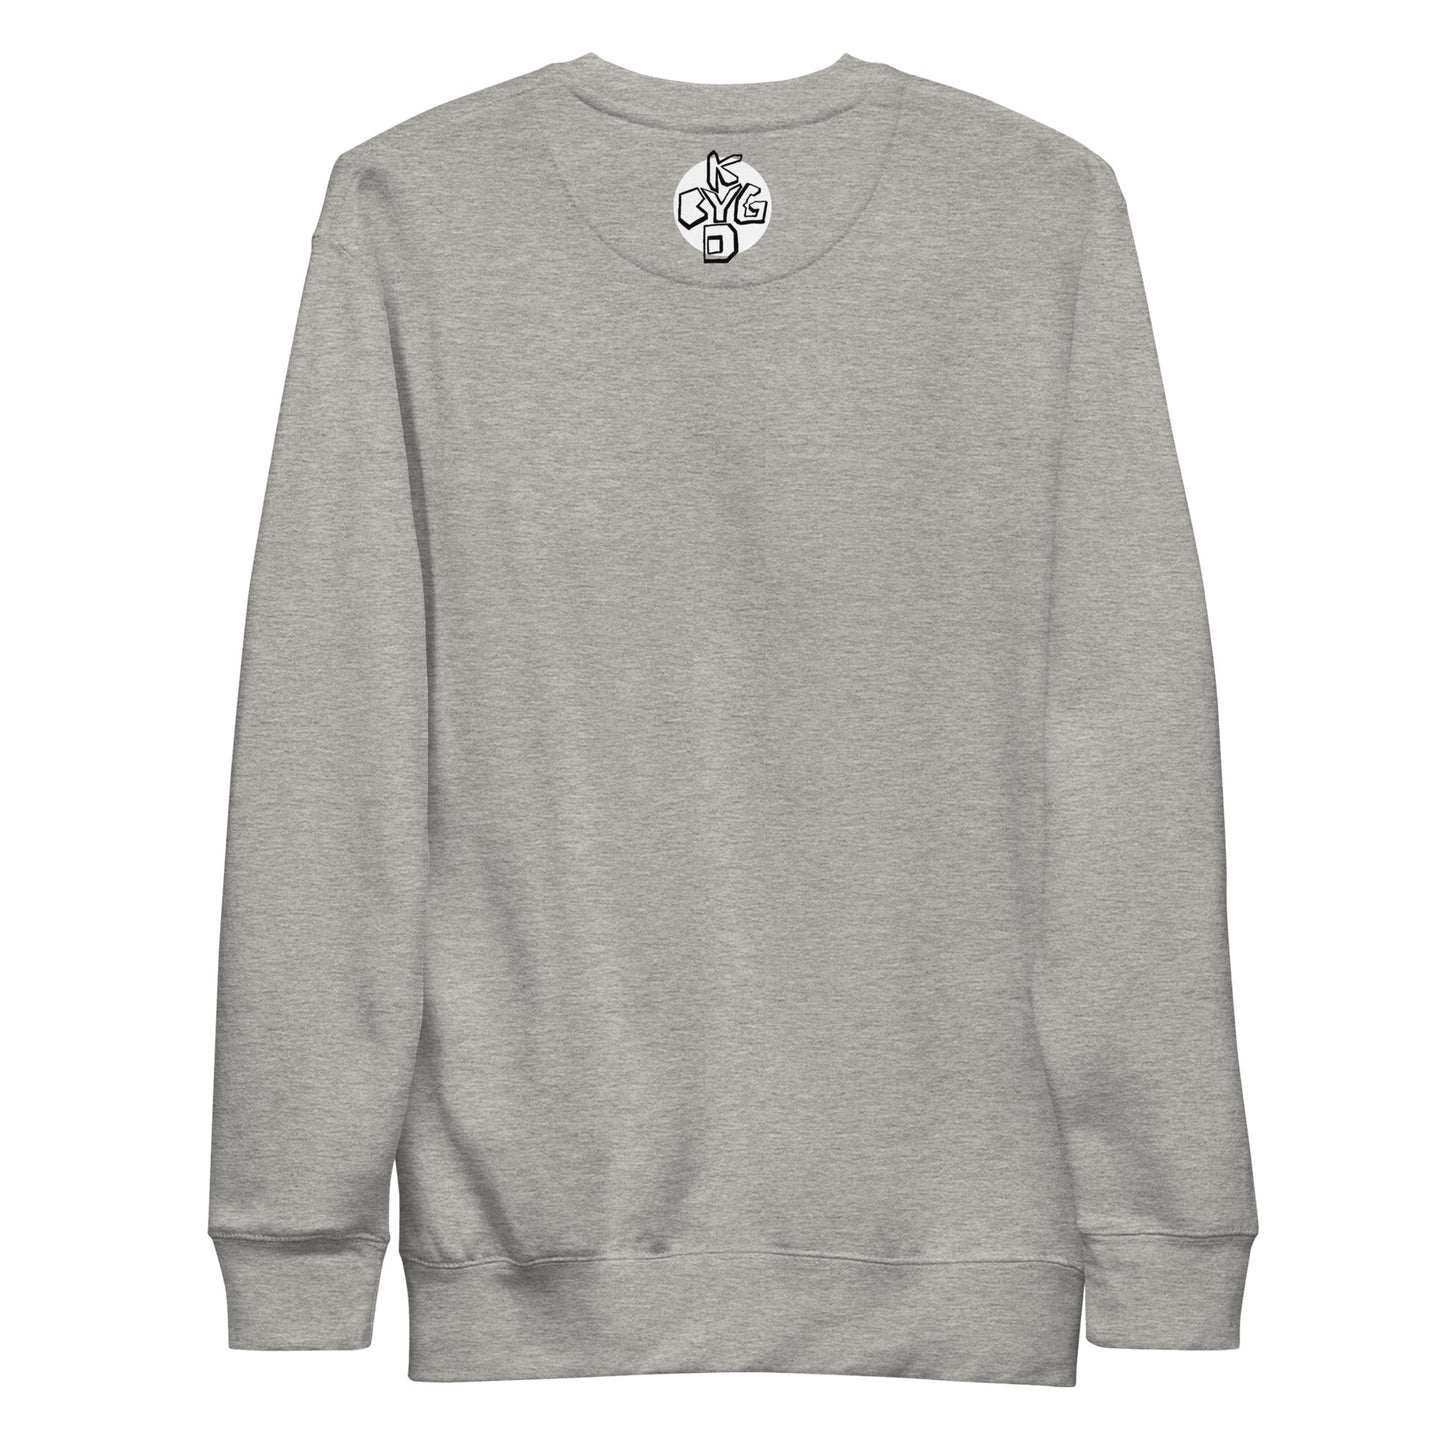 Tony The Thiger - Unisex Premium Sweatshirt (S-3XL)